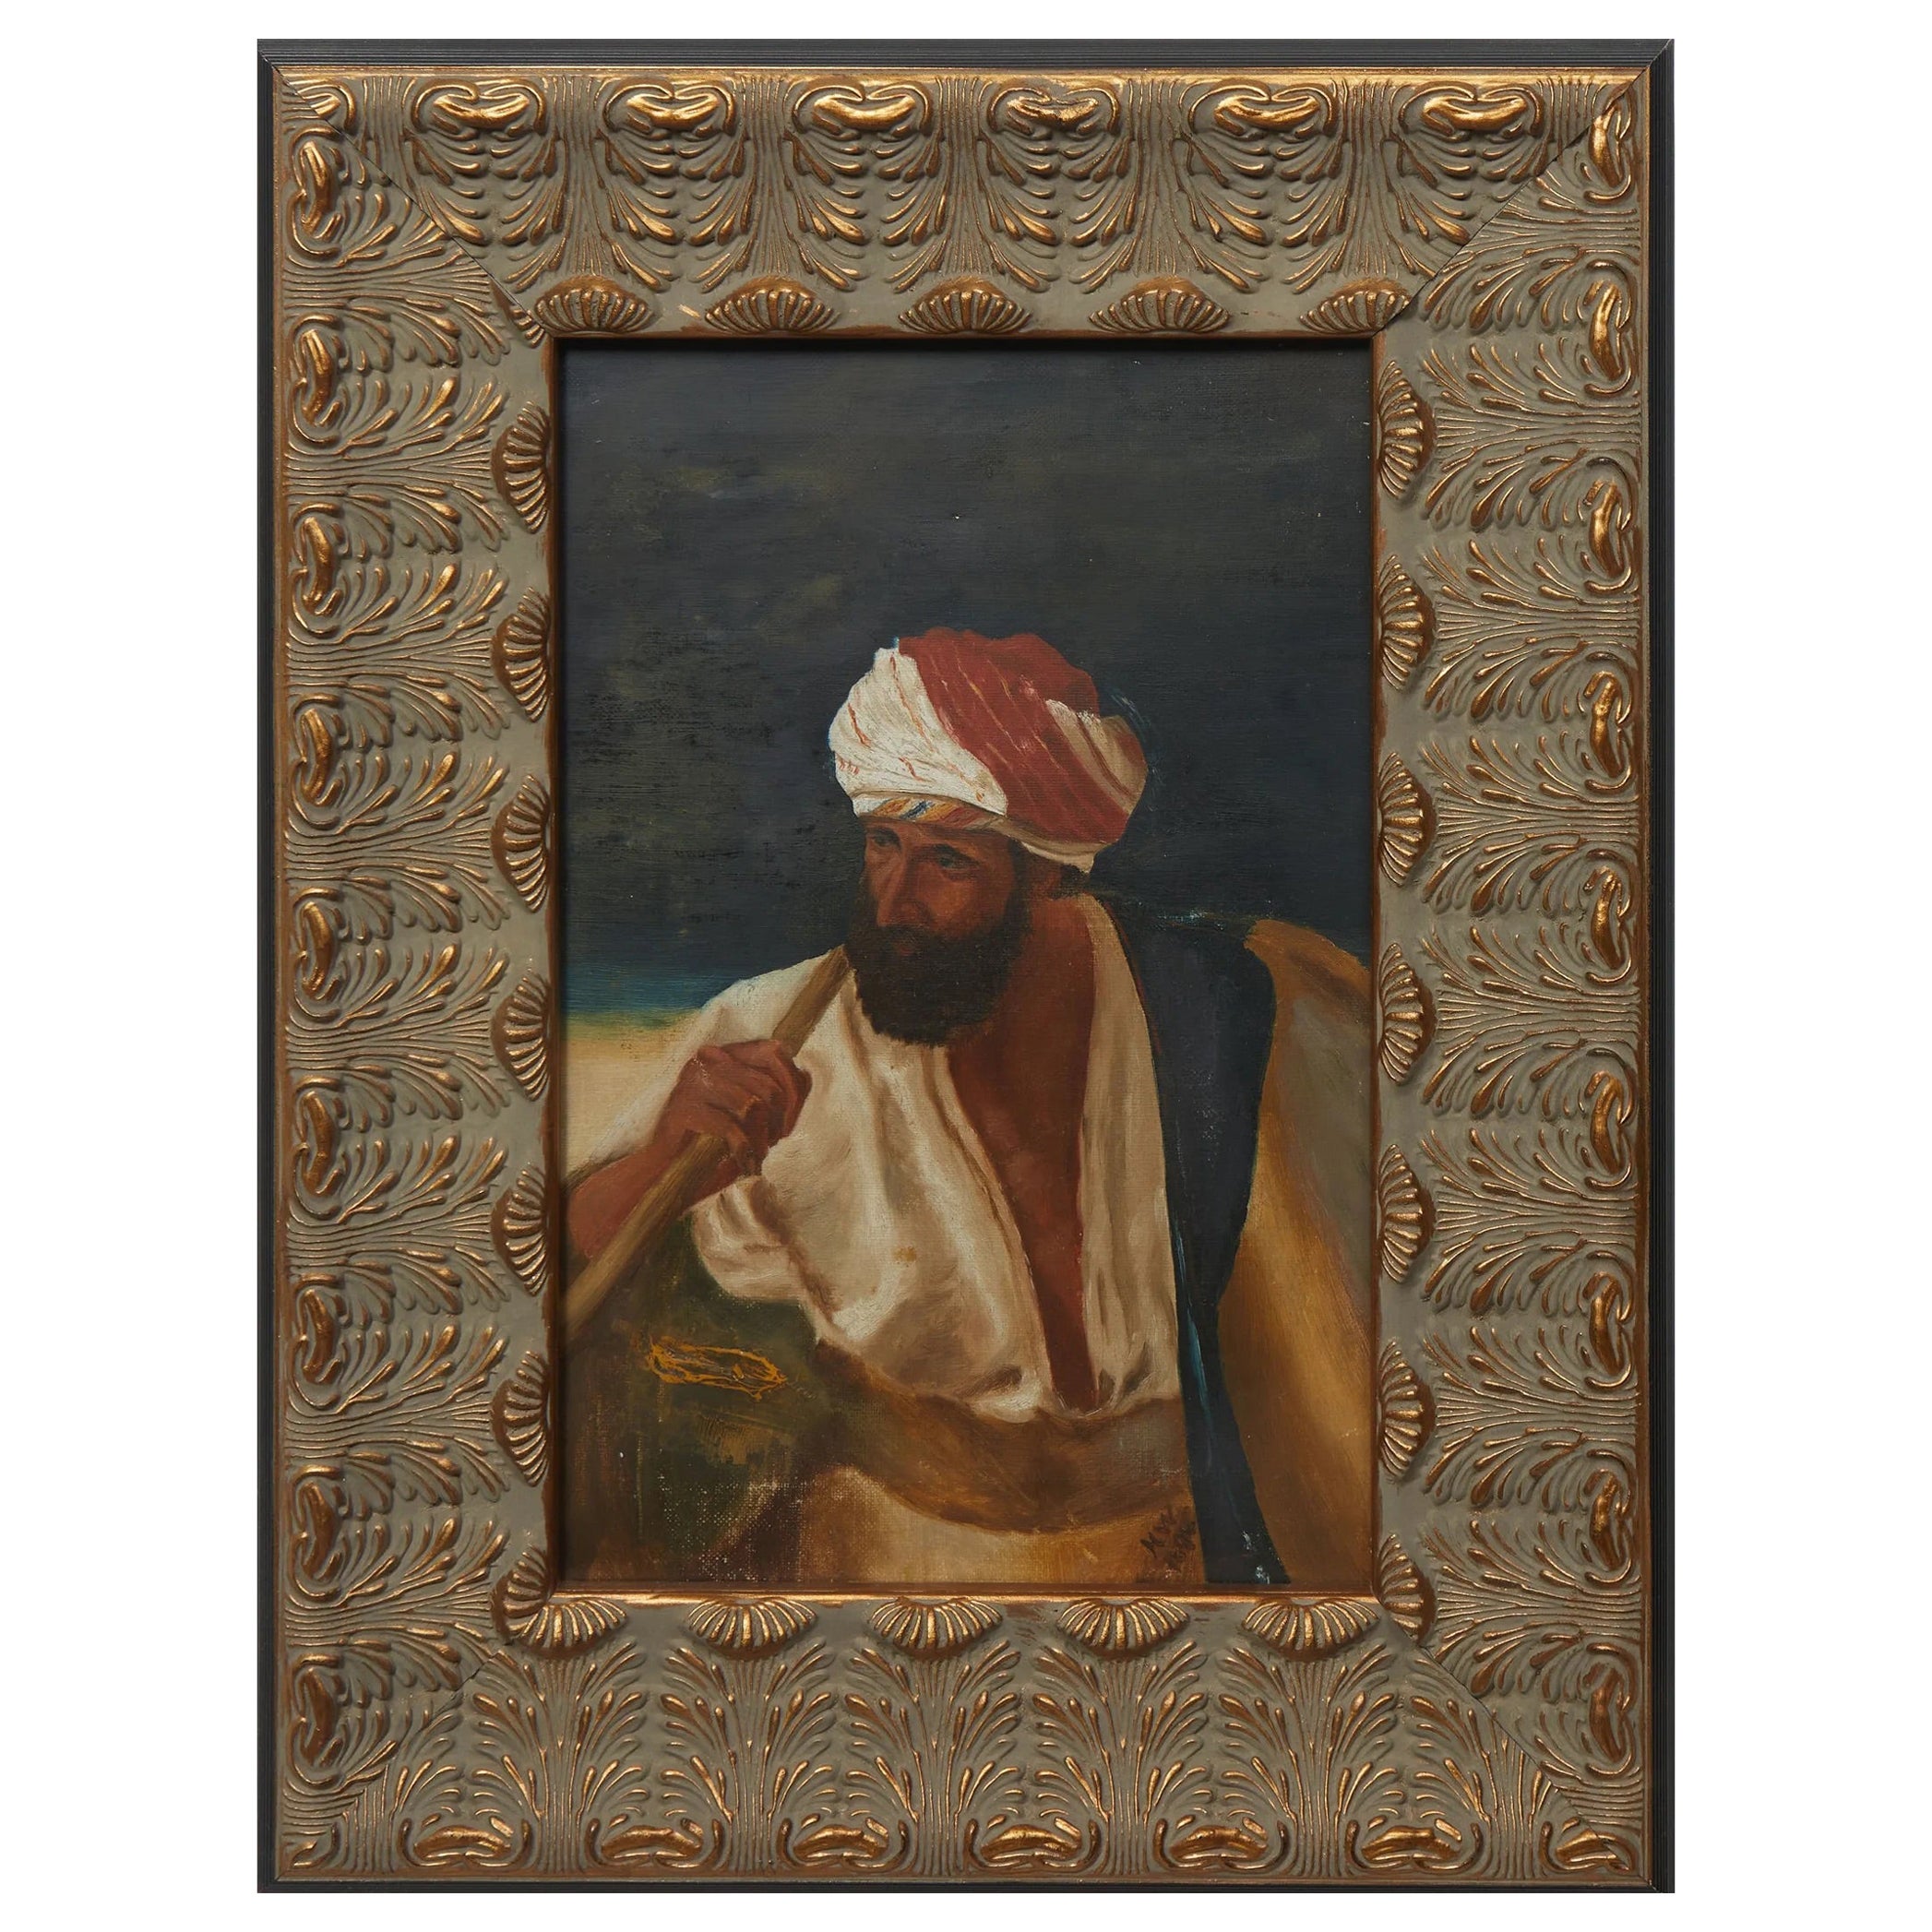 After John Morgan, "Portrait of a Man of Bethlehem" Orientalist Painting